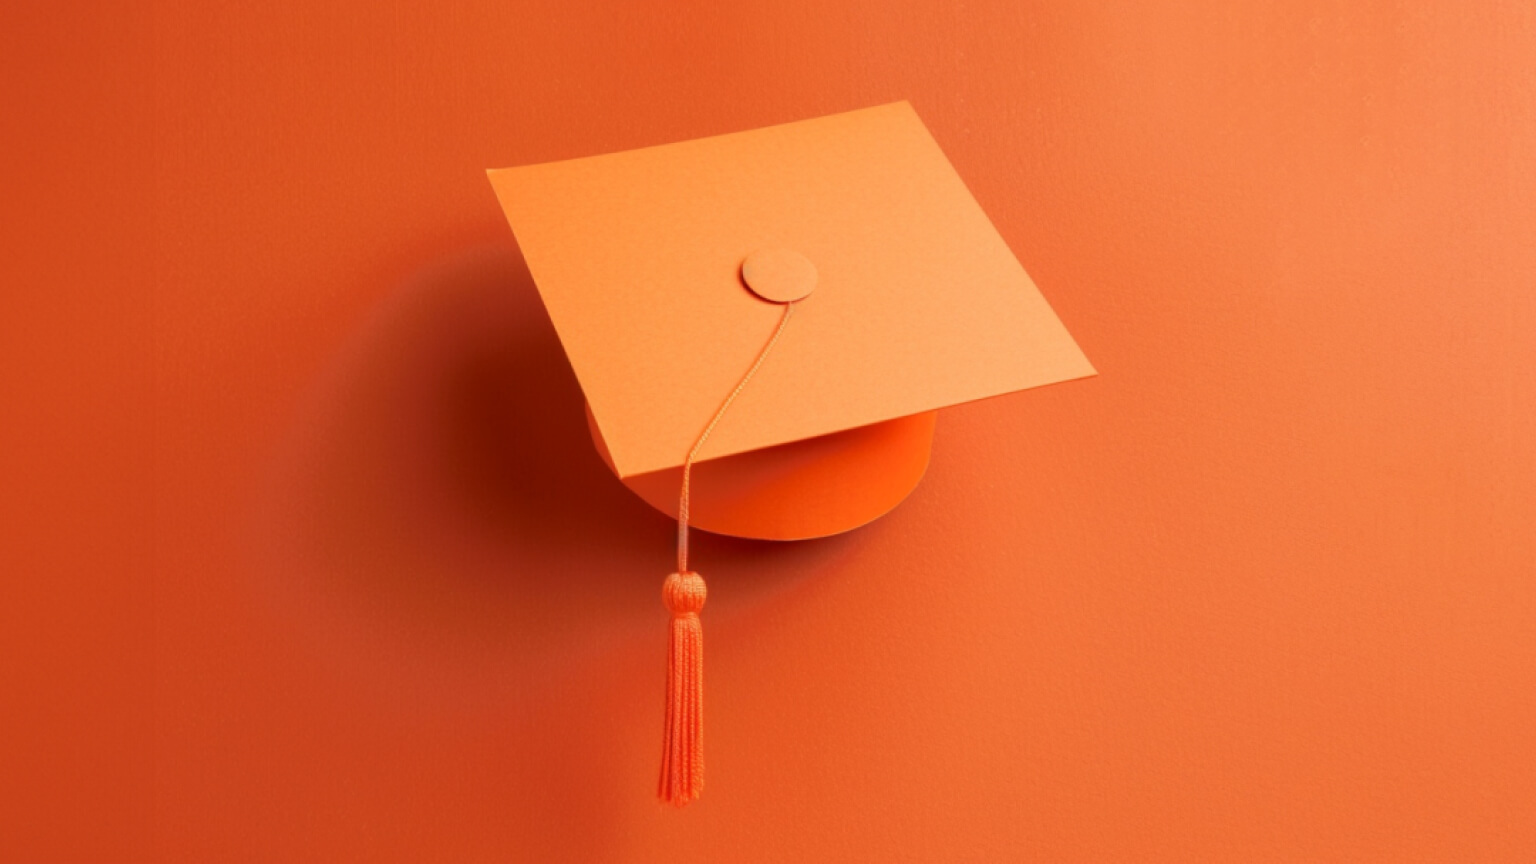 graduation cap on orange background, symbolizing looking for a job